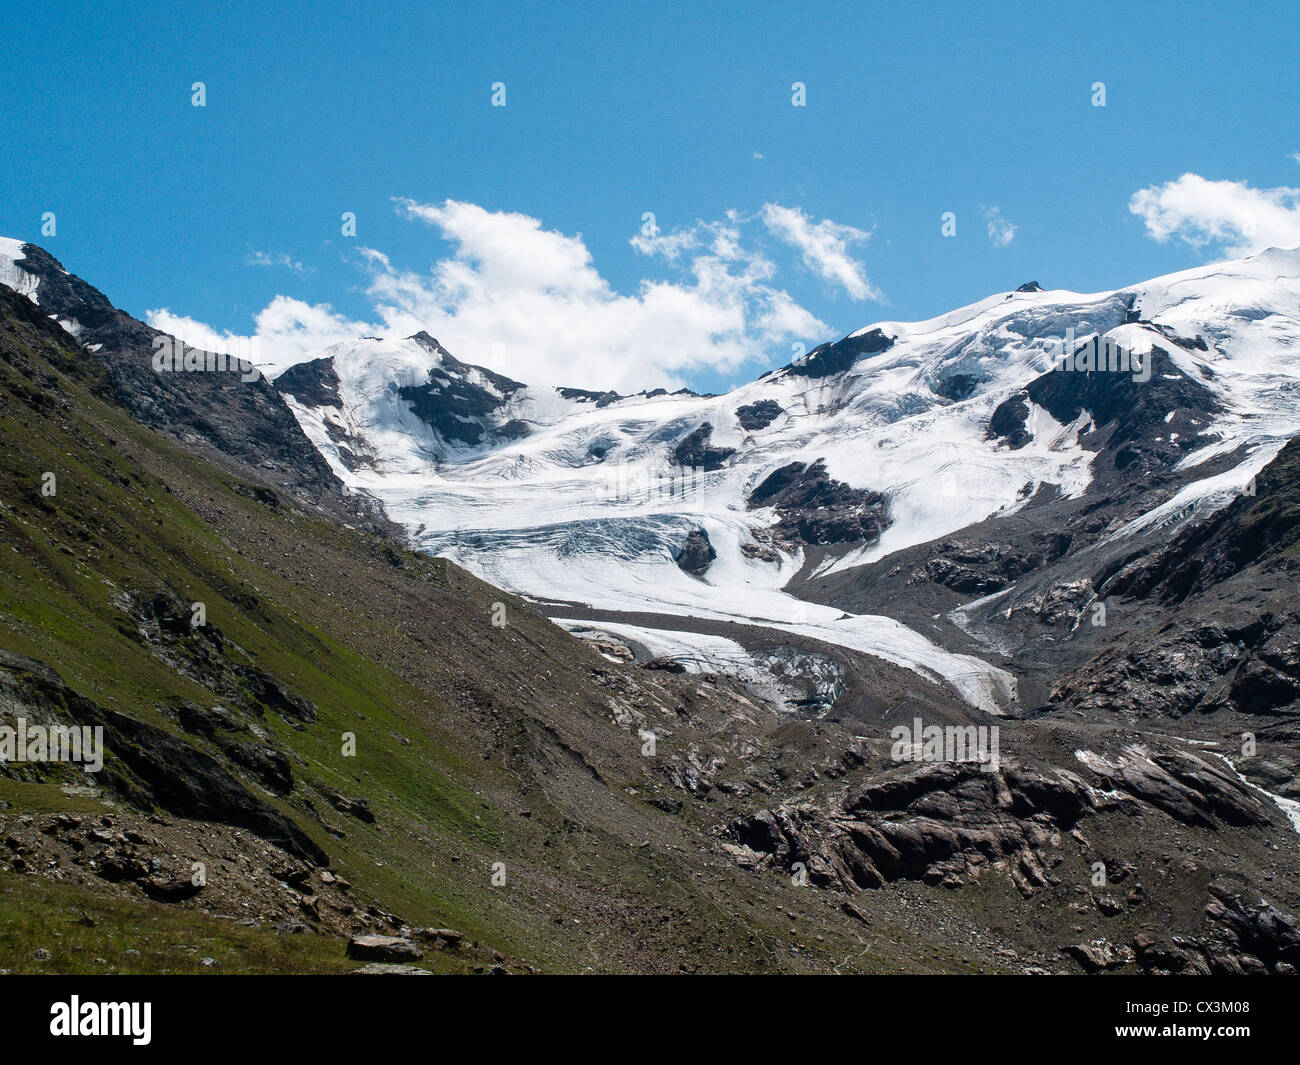 Forni-Gletscher, Nationalpark Stilfser Joch, Lombardei, Italien  Stockfotografie - Alamy